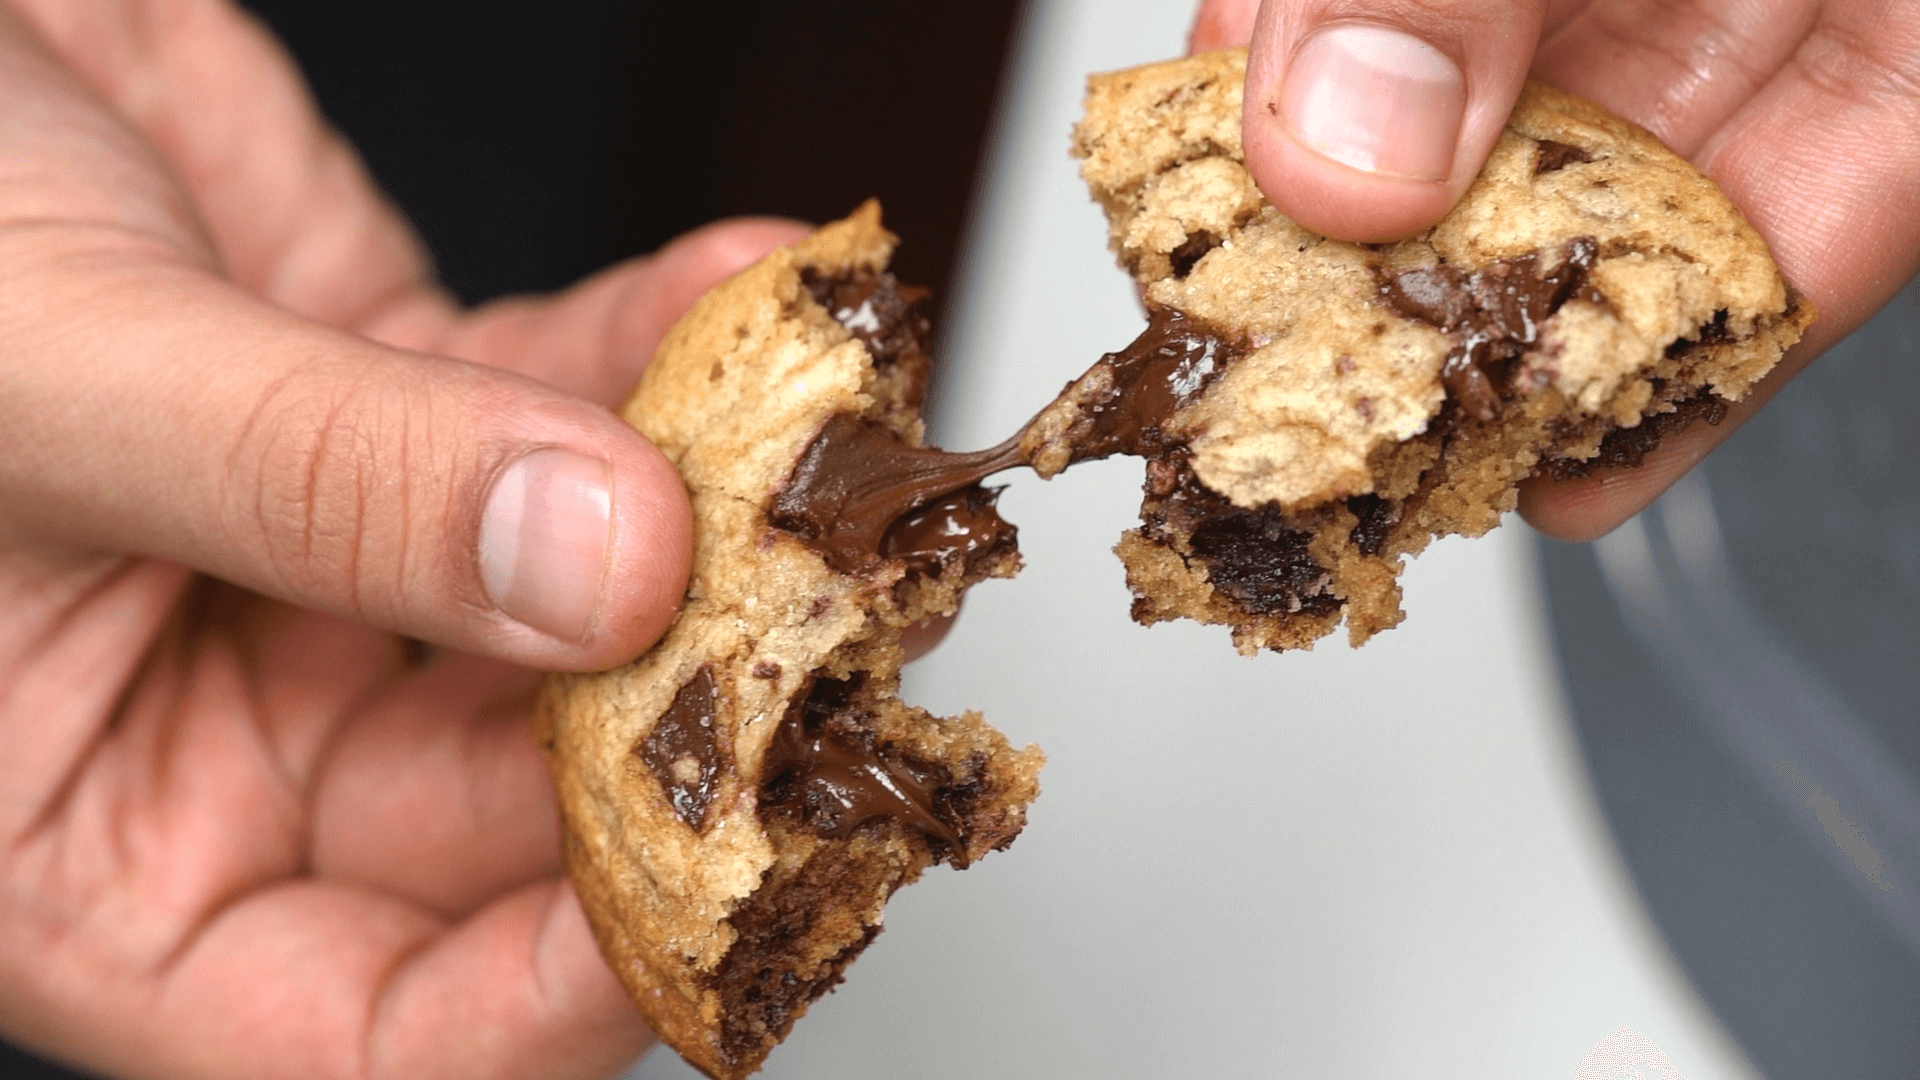 Chocoloate cookies